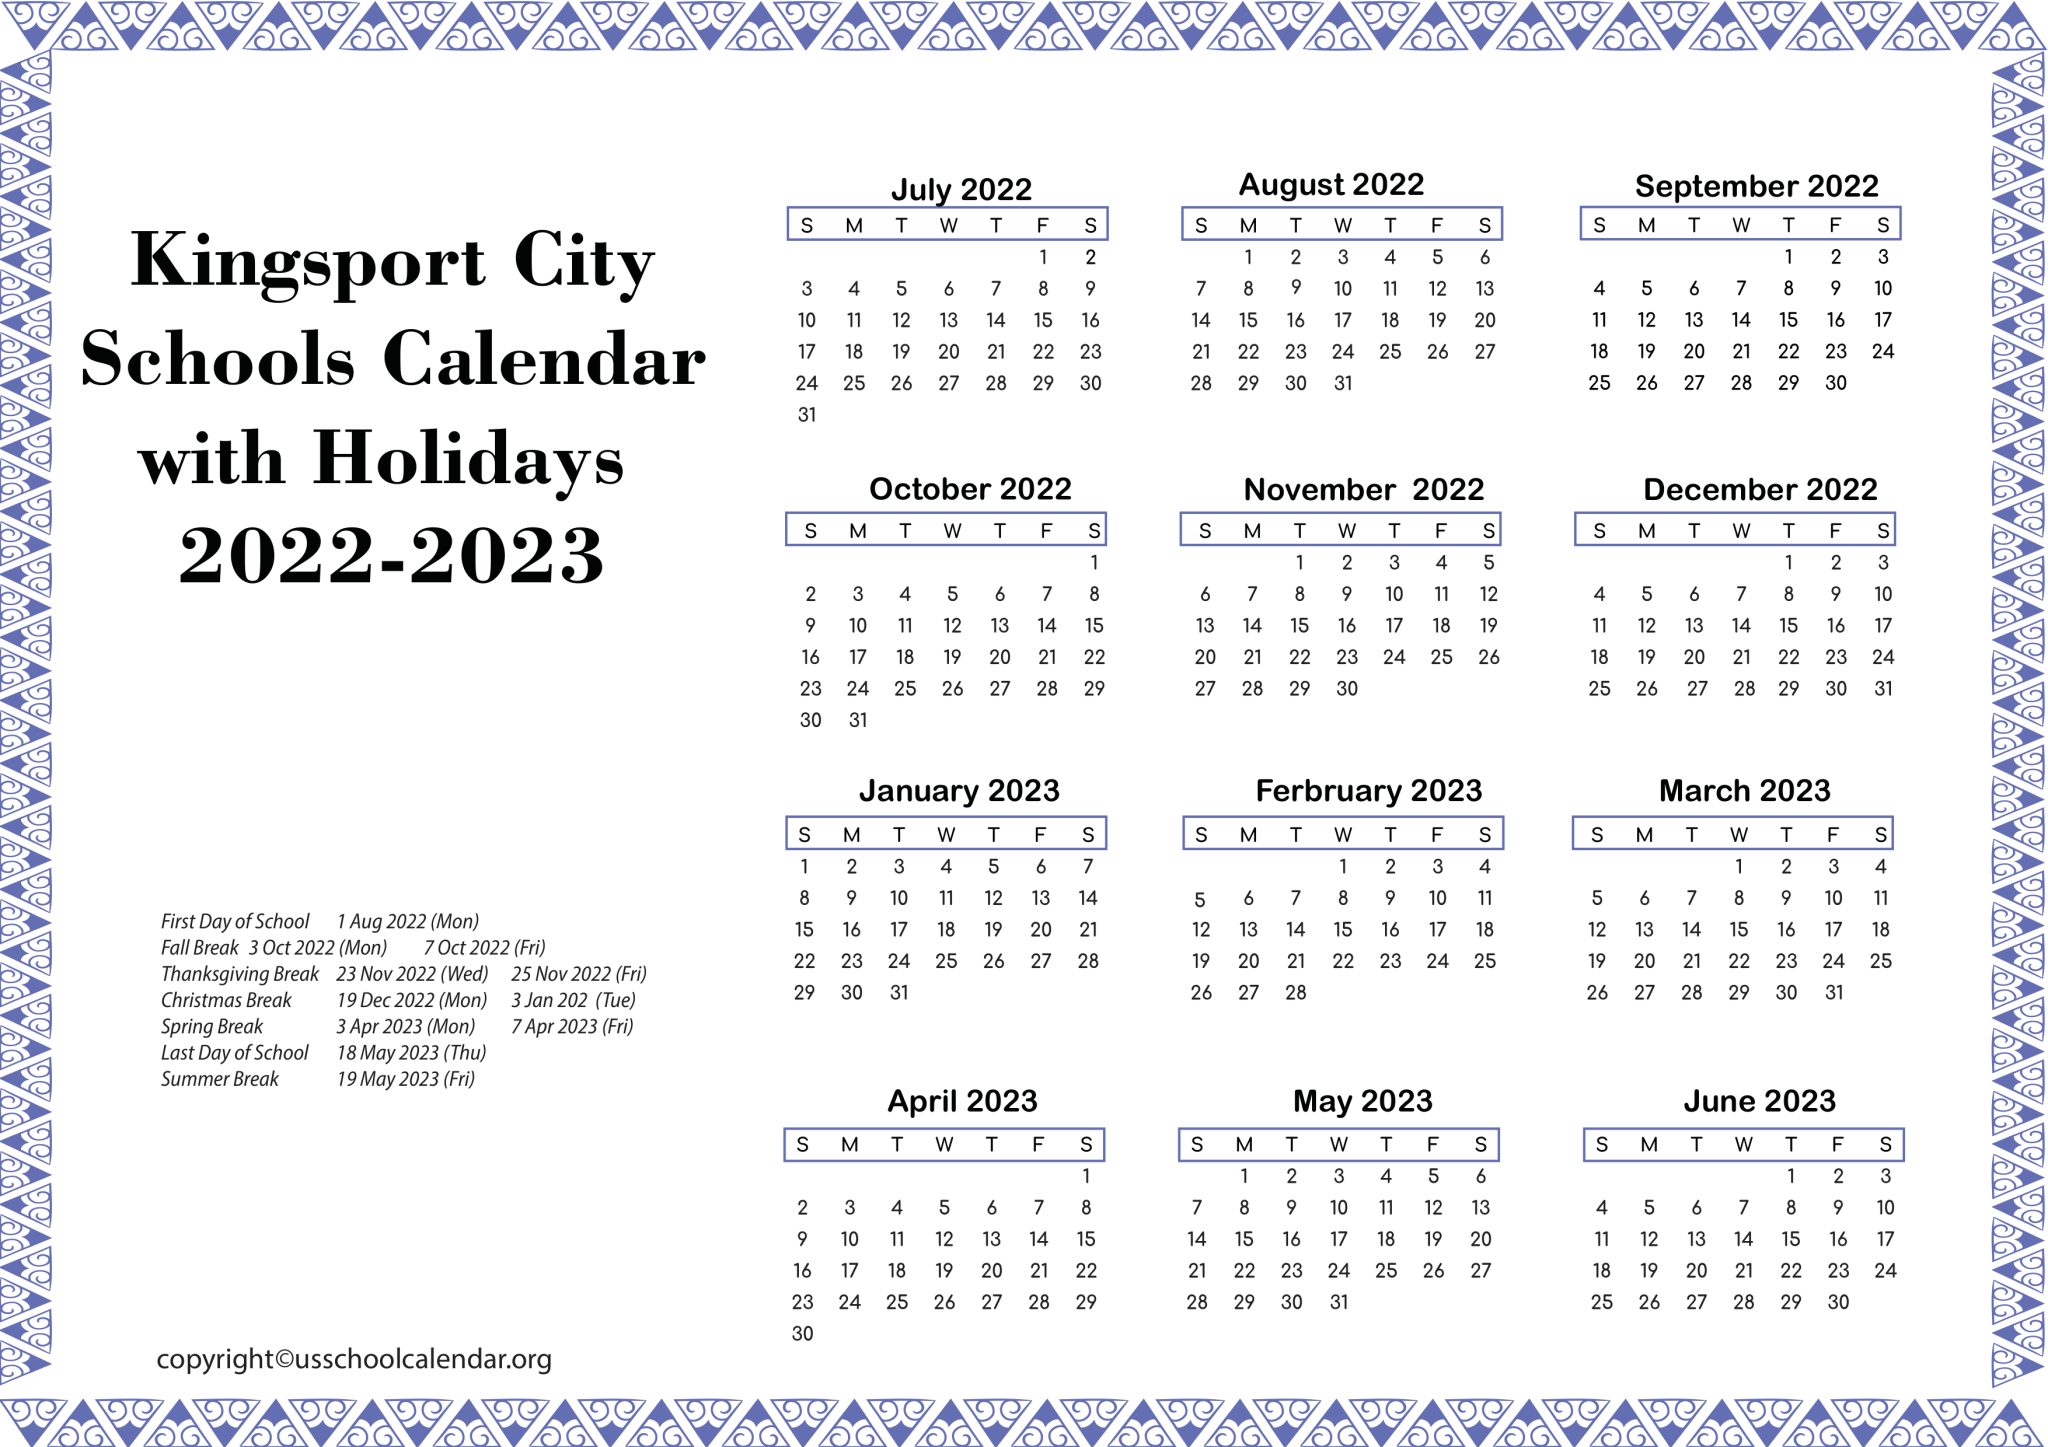 kingsport-city-schools-calendar-with-holidays-2022-2023